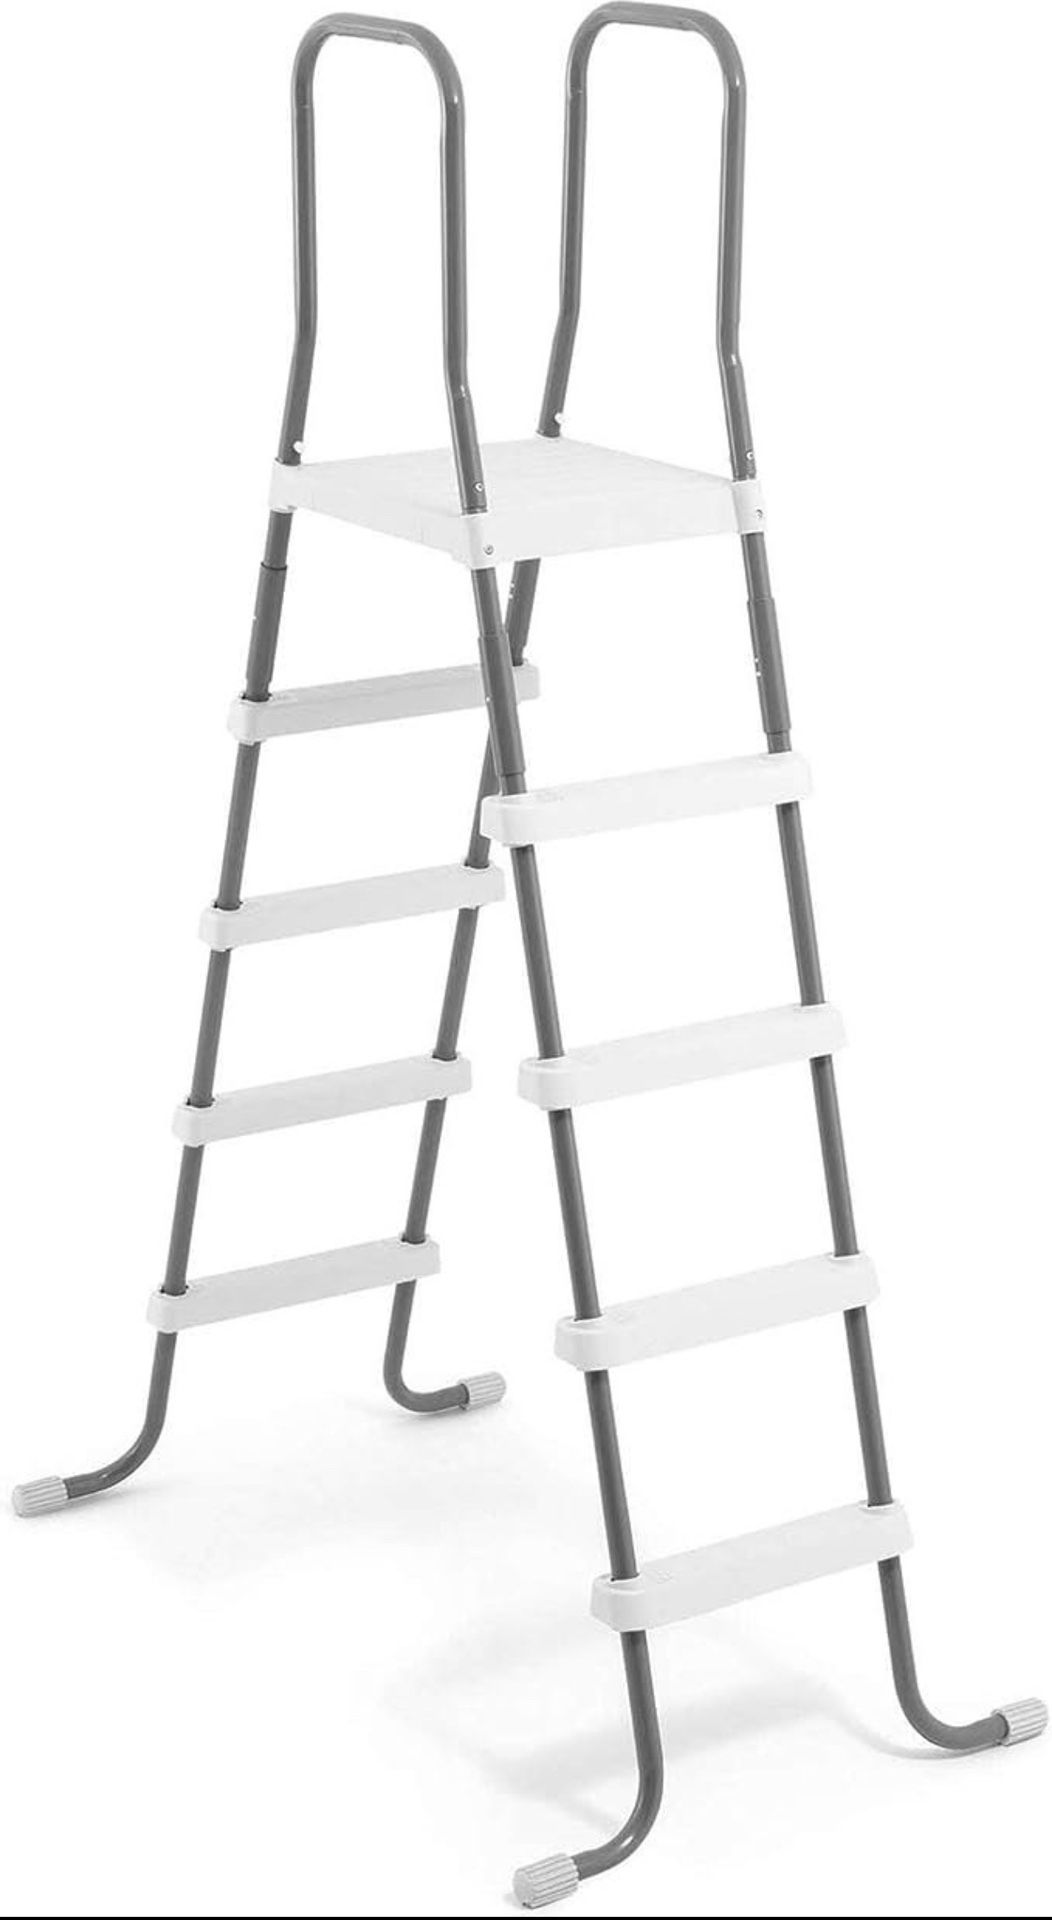 Intex Pool Ladder for 52in Depth Pools